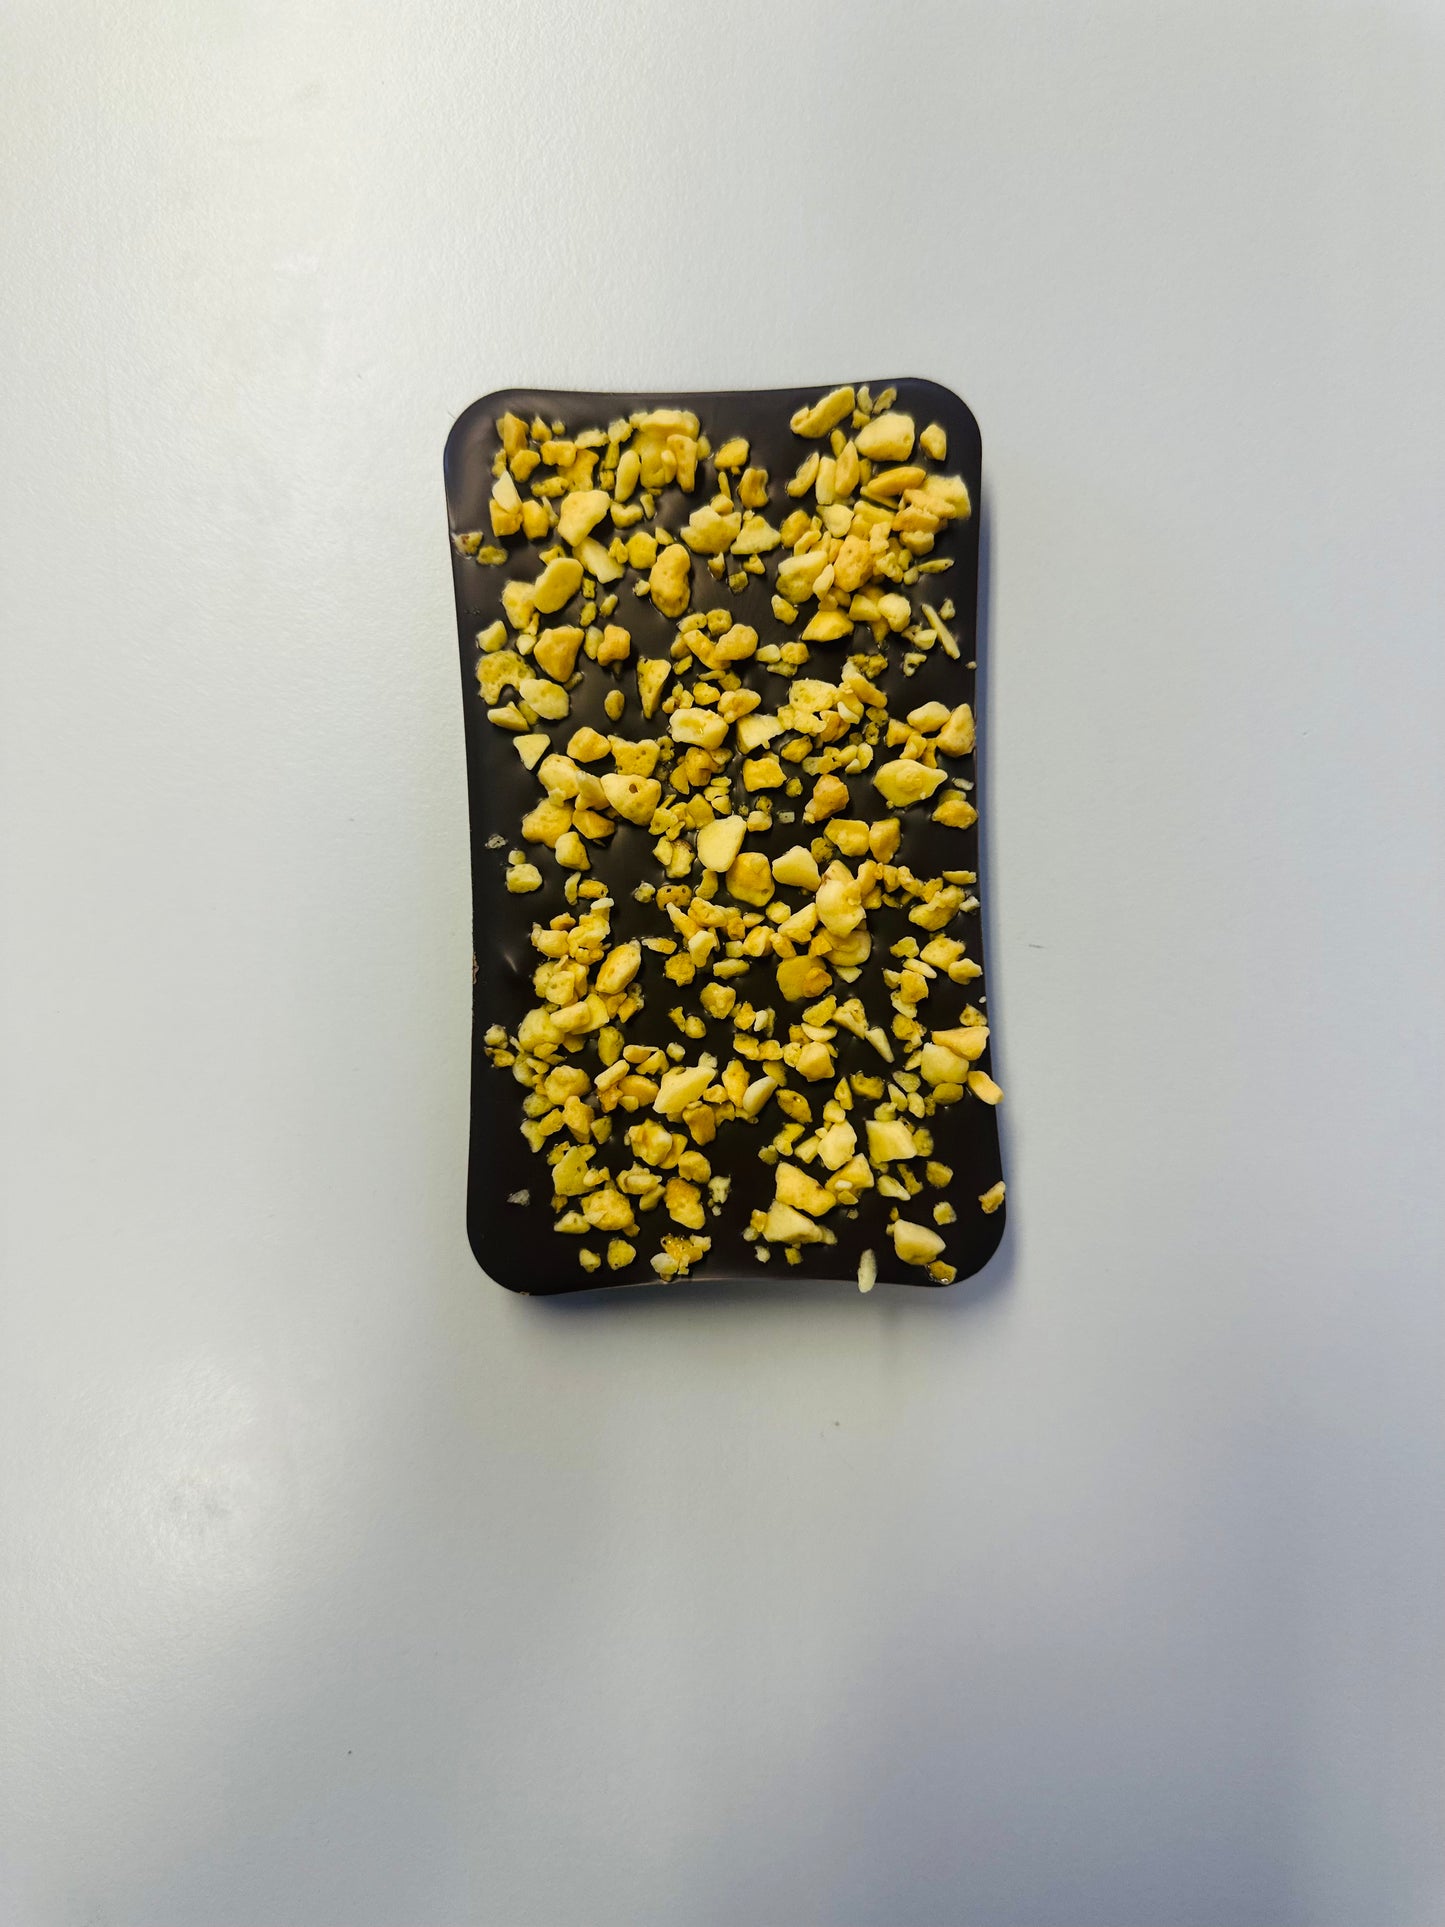 DARK CHOCOLATE SLAB with honeycomb